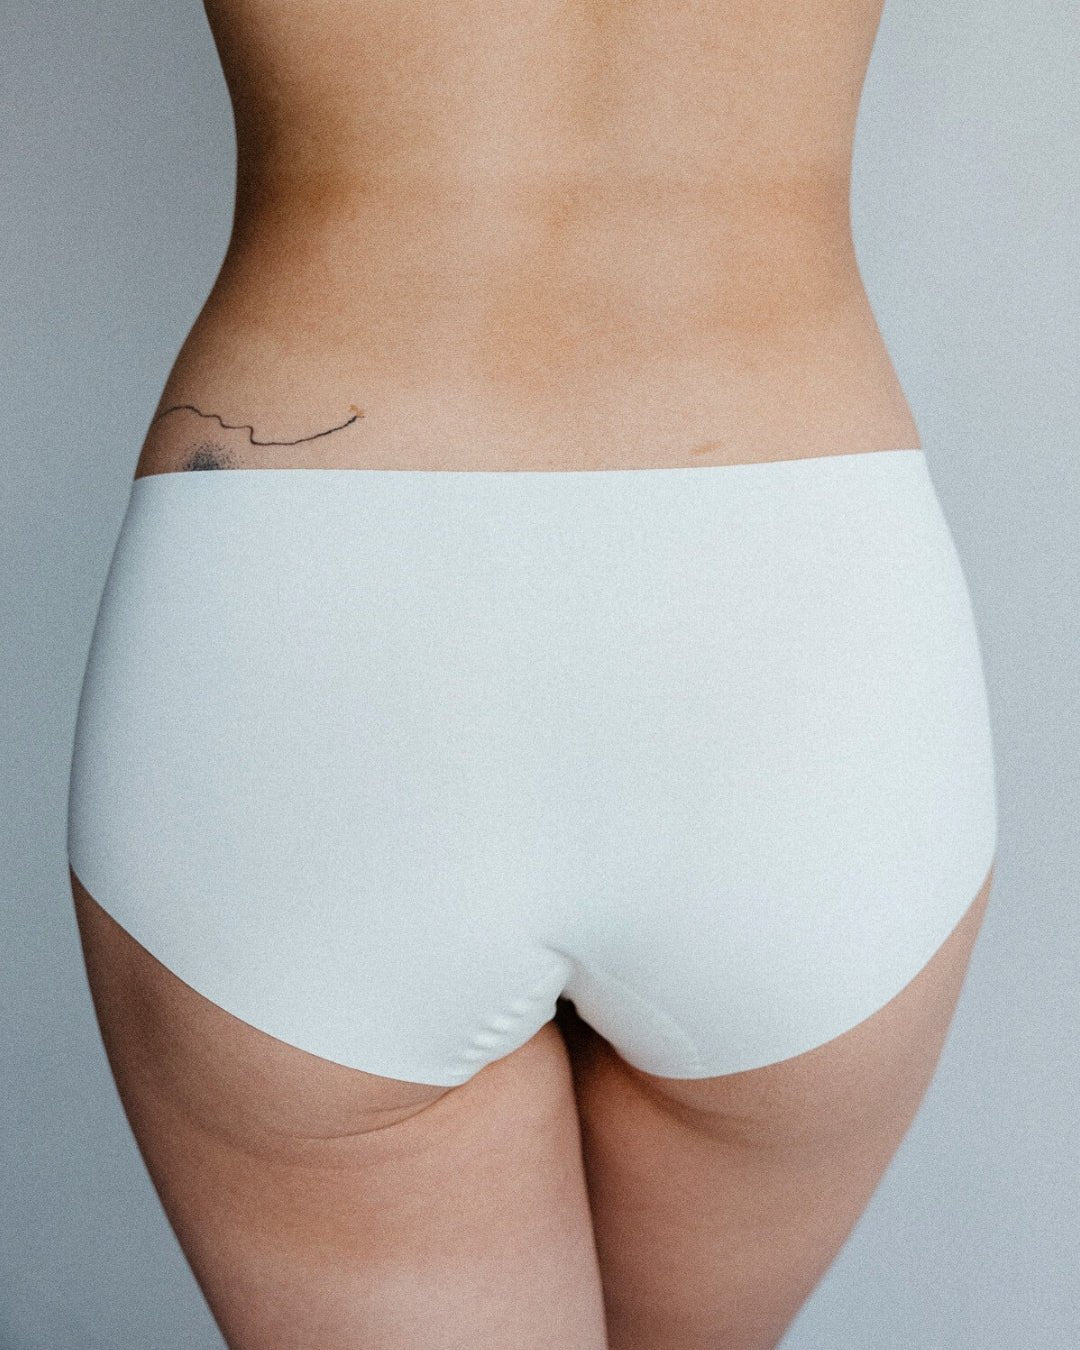 SKIWEND Slip Shorts Women Seamless Boyshorts Panties for Under